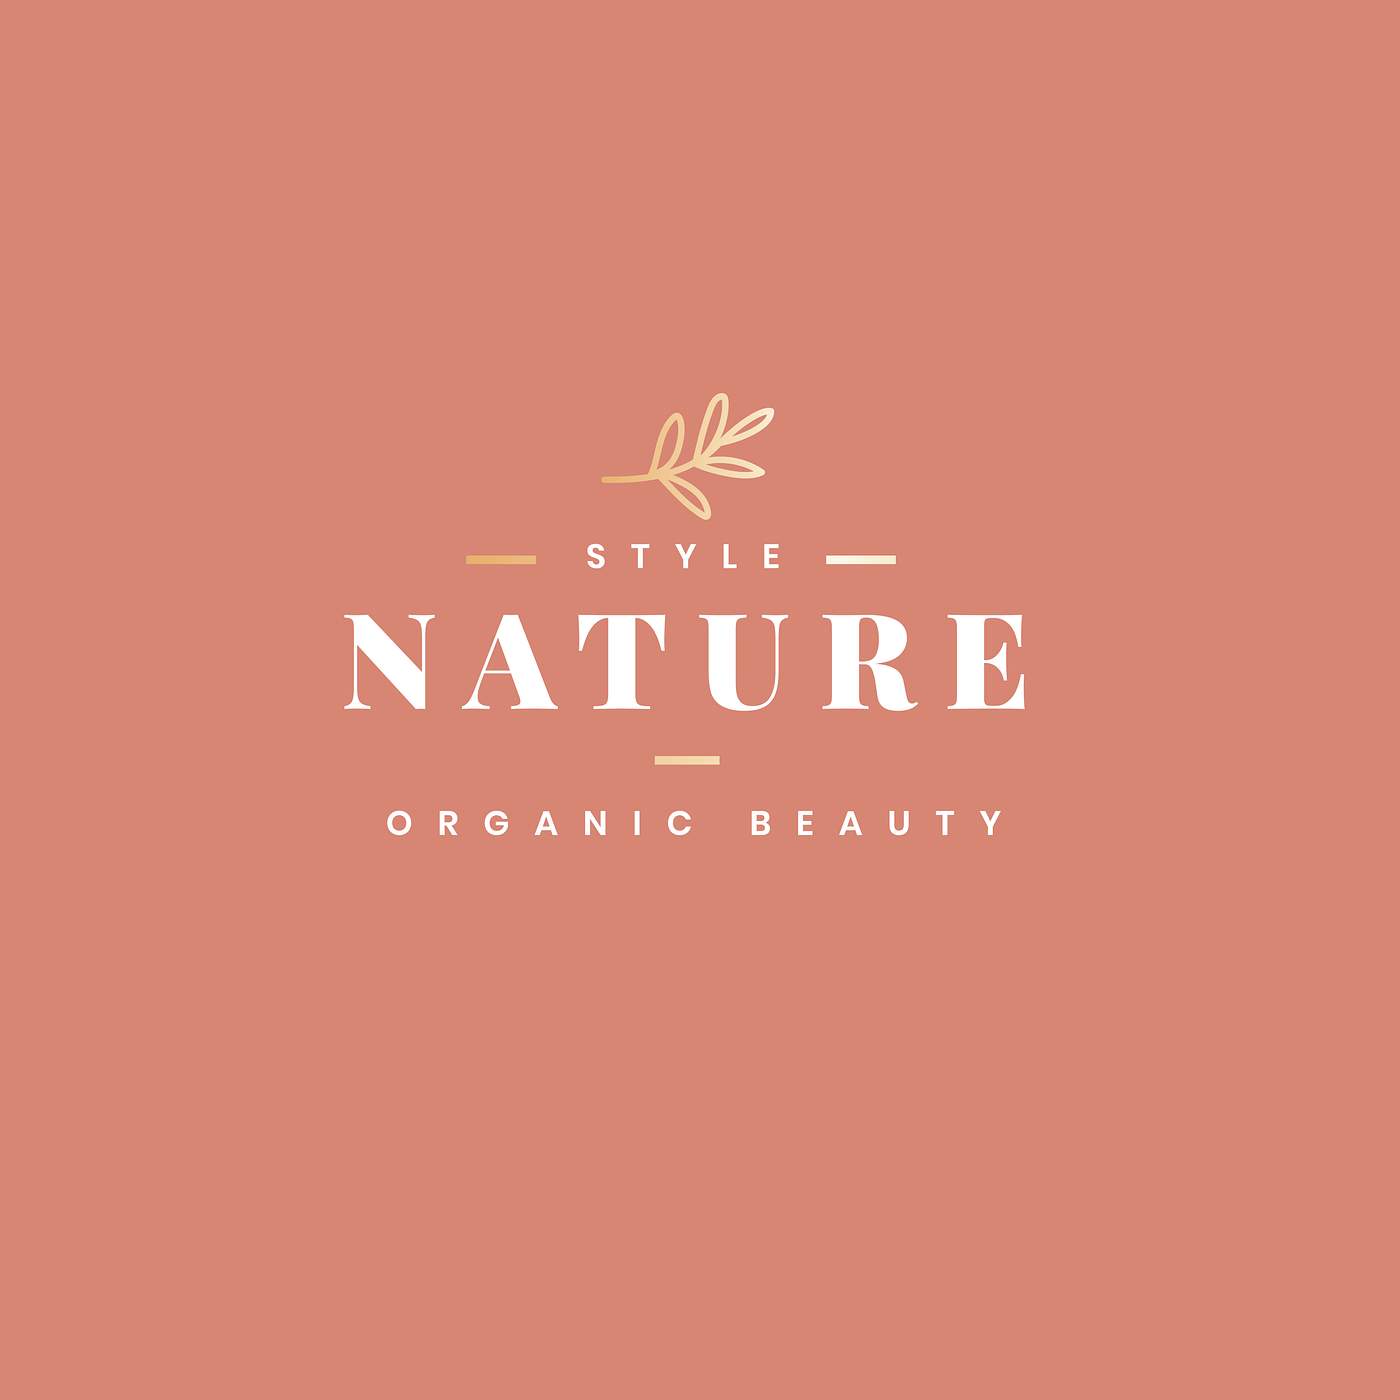 Nature logo design | Free vector - 598723